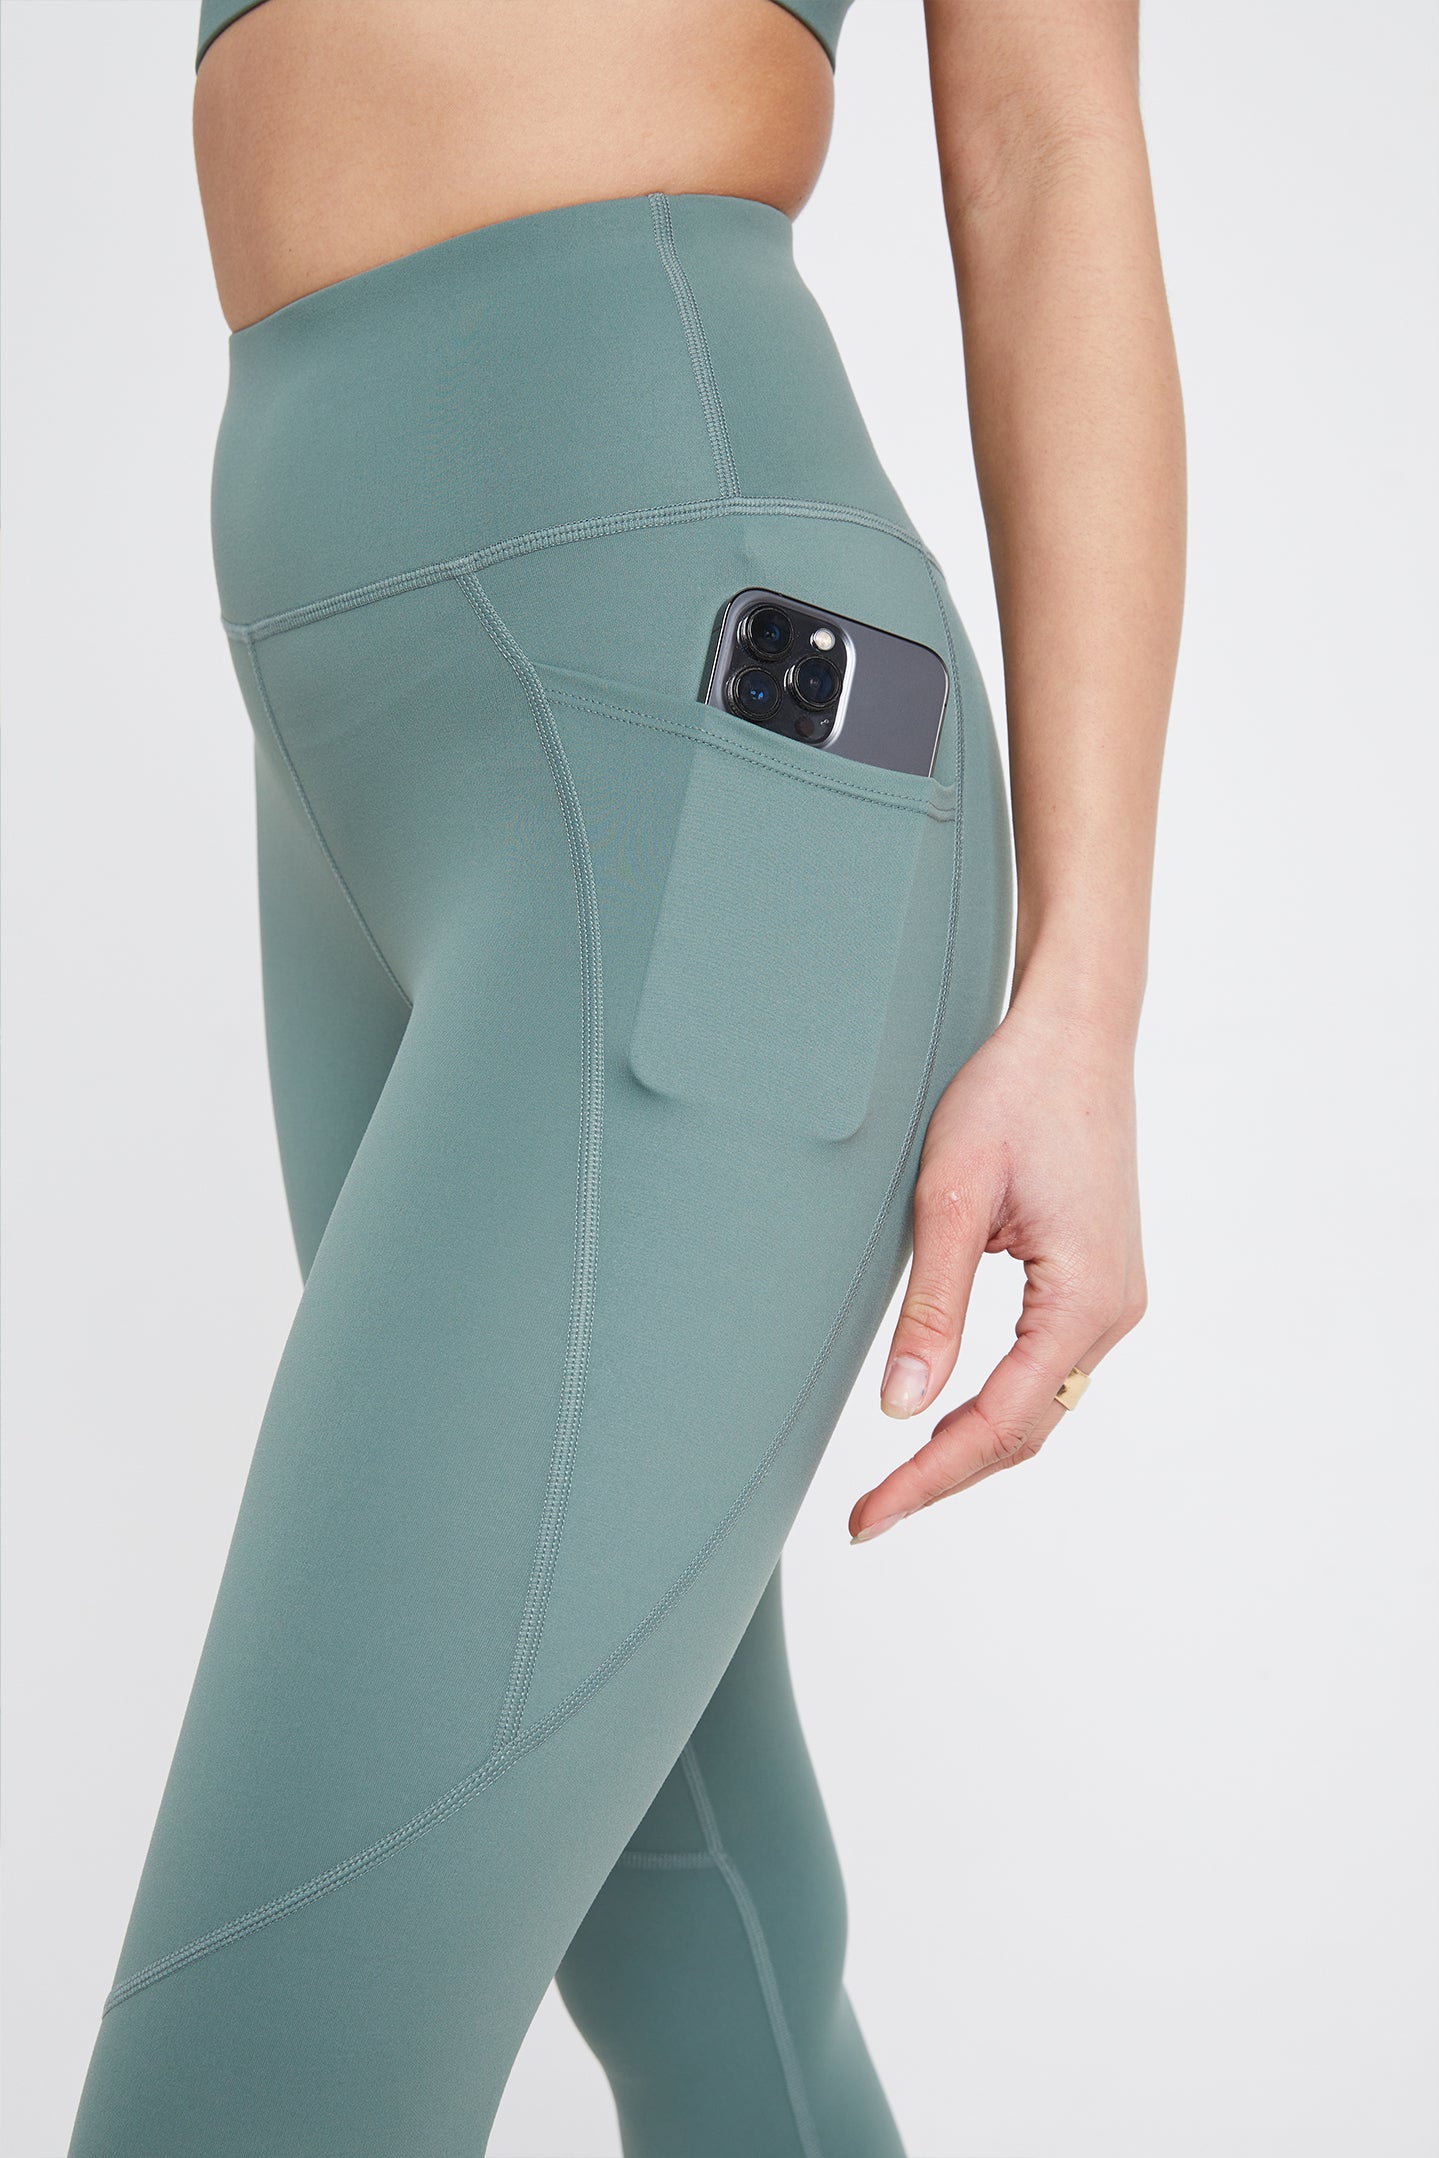 Butter Leggings Women's Athleisure Yoga Pants w Pockets Size S-3X